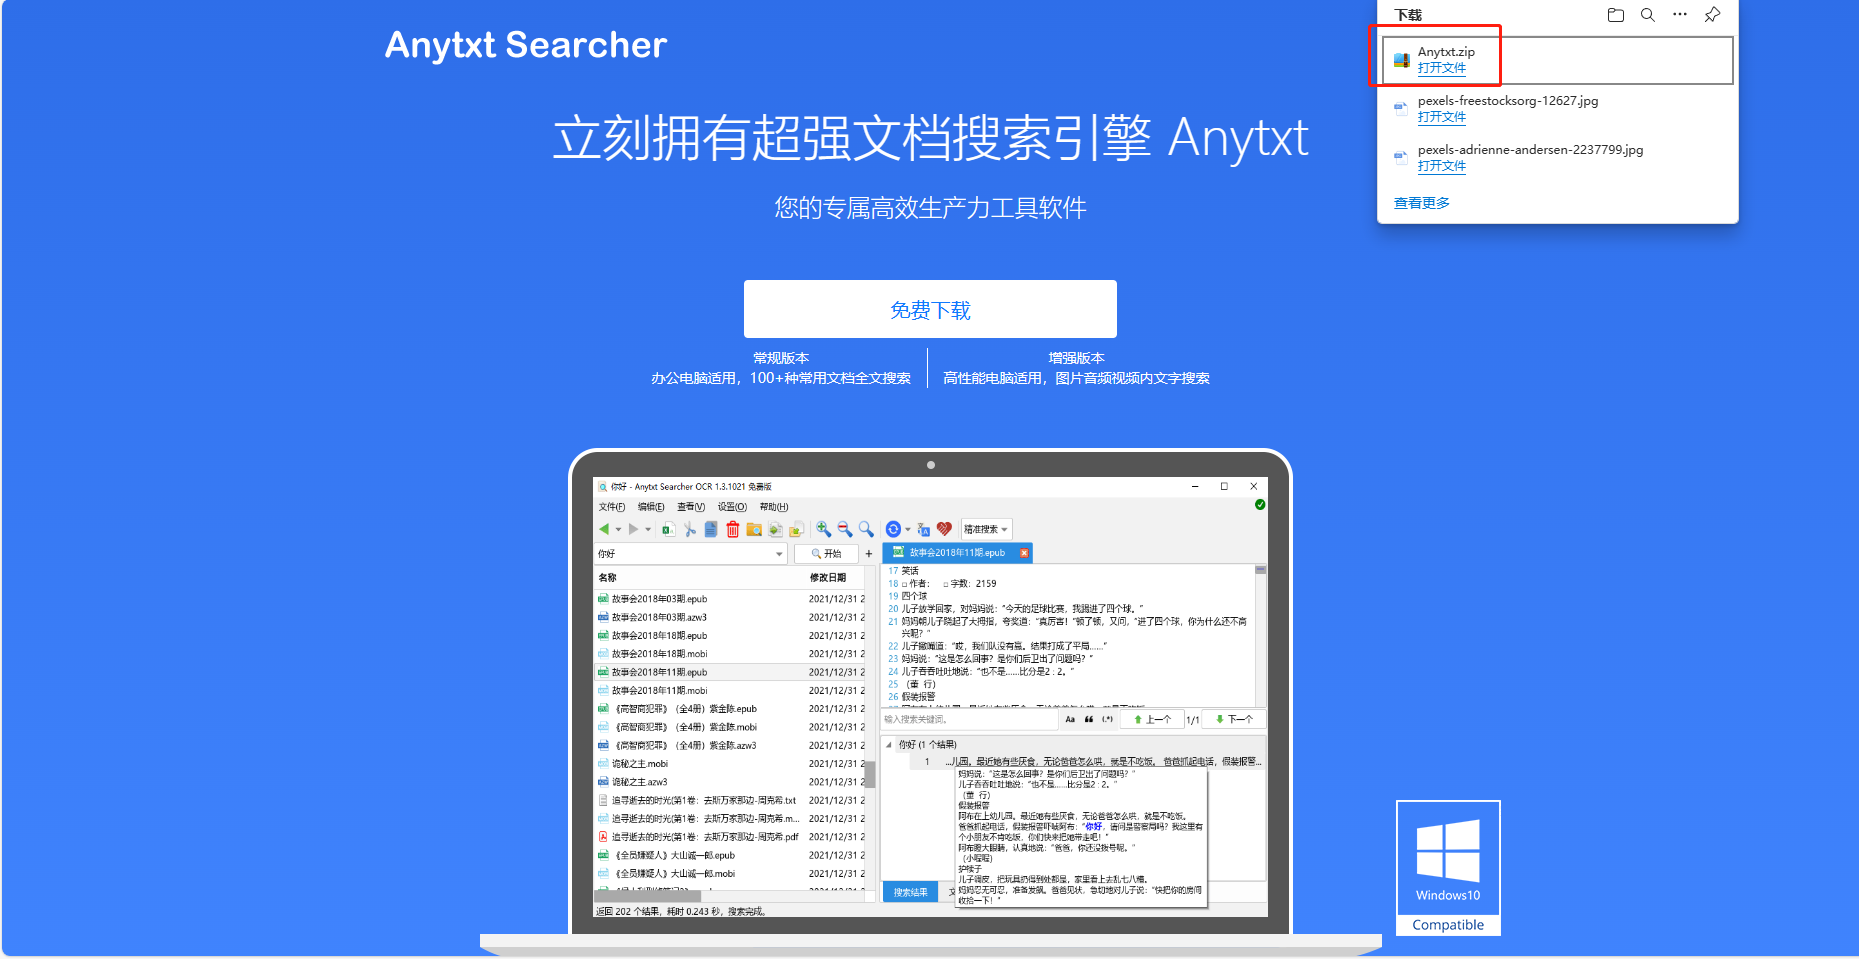 超强文档搜索引擎AnyTXT Searcher本地搭建,897b57023c266c31e25f9767bf5efe7,第4张